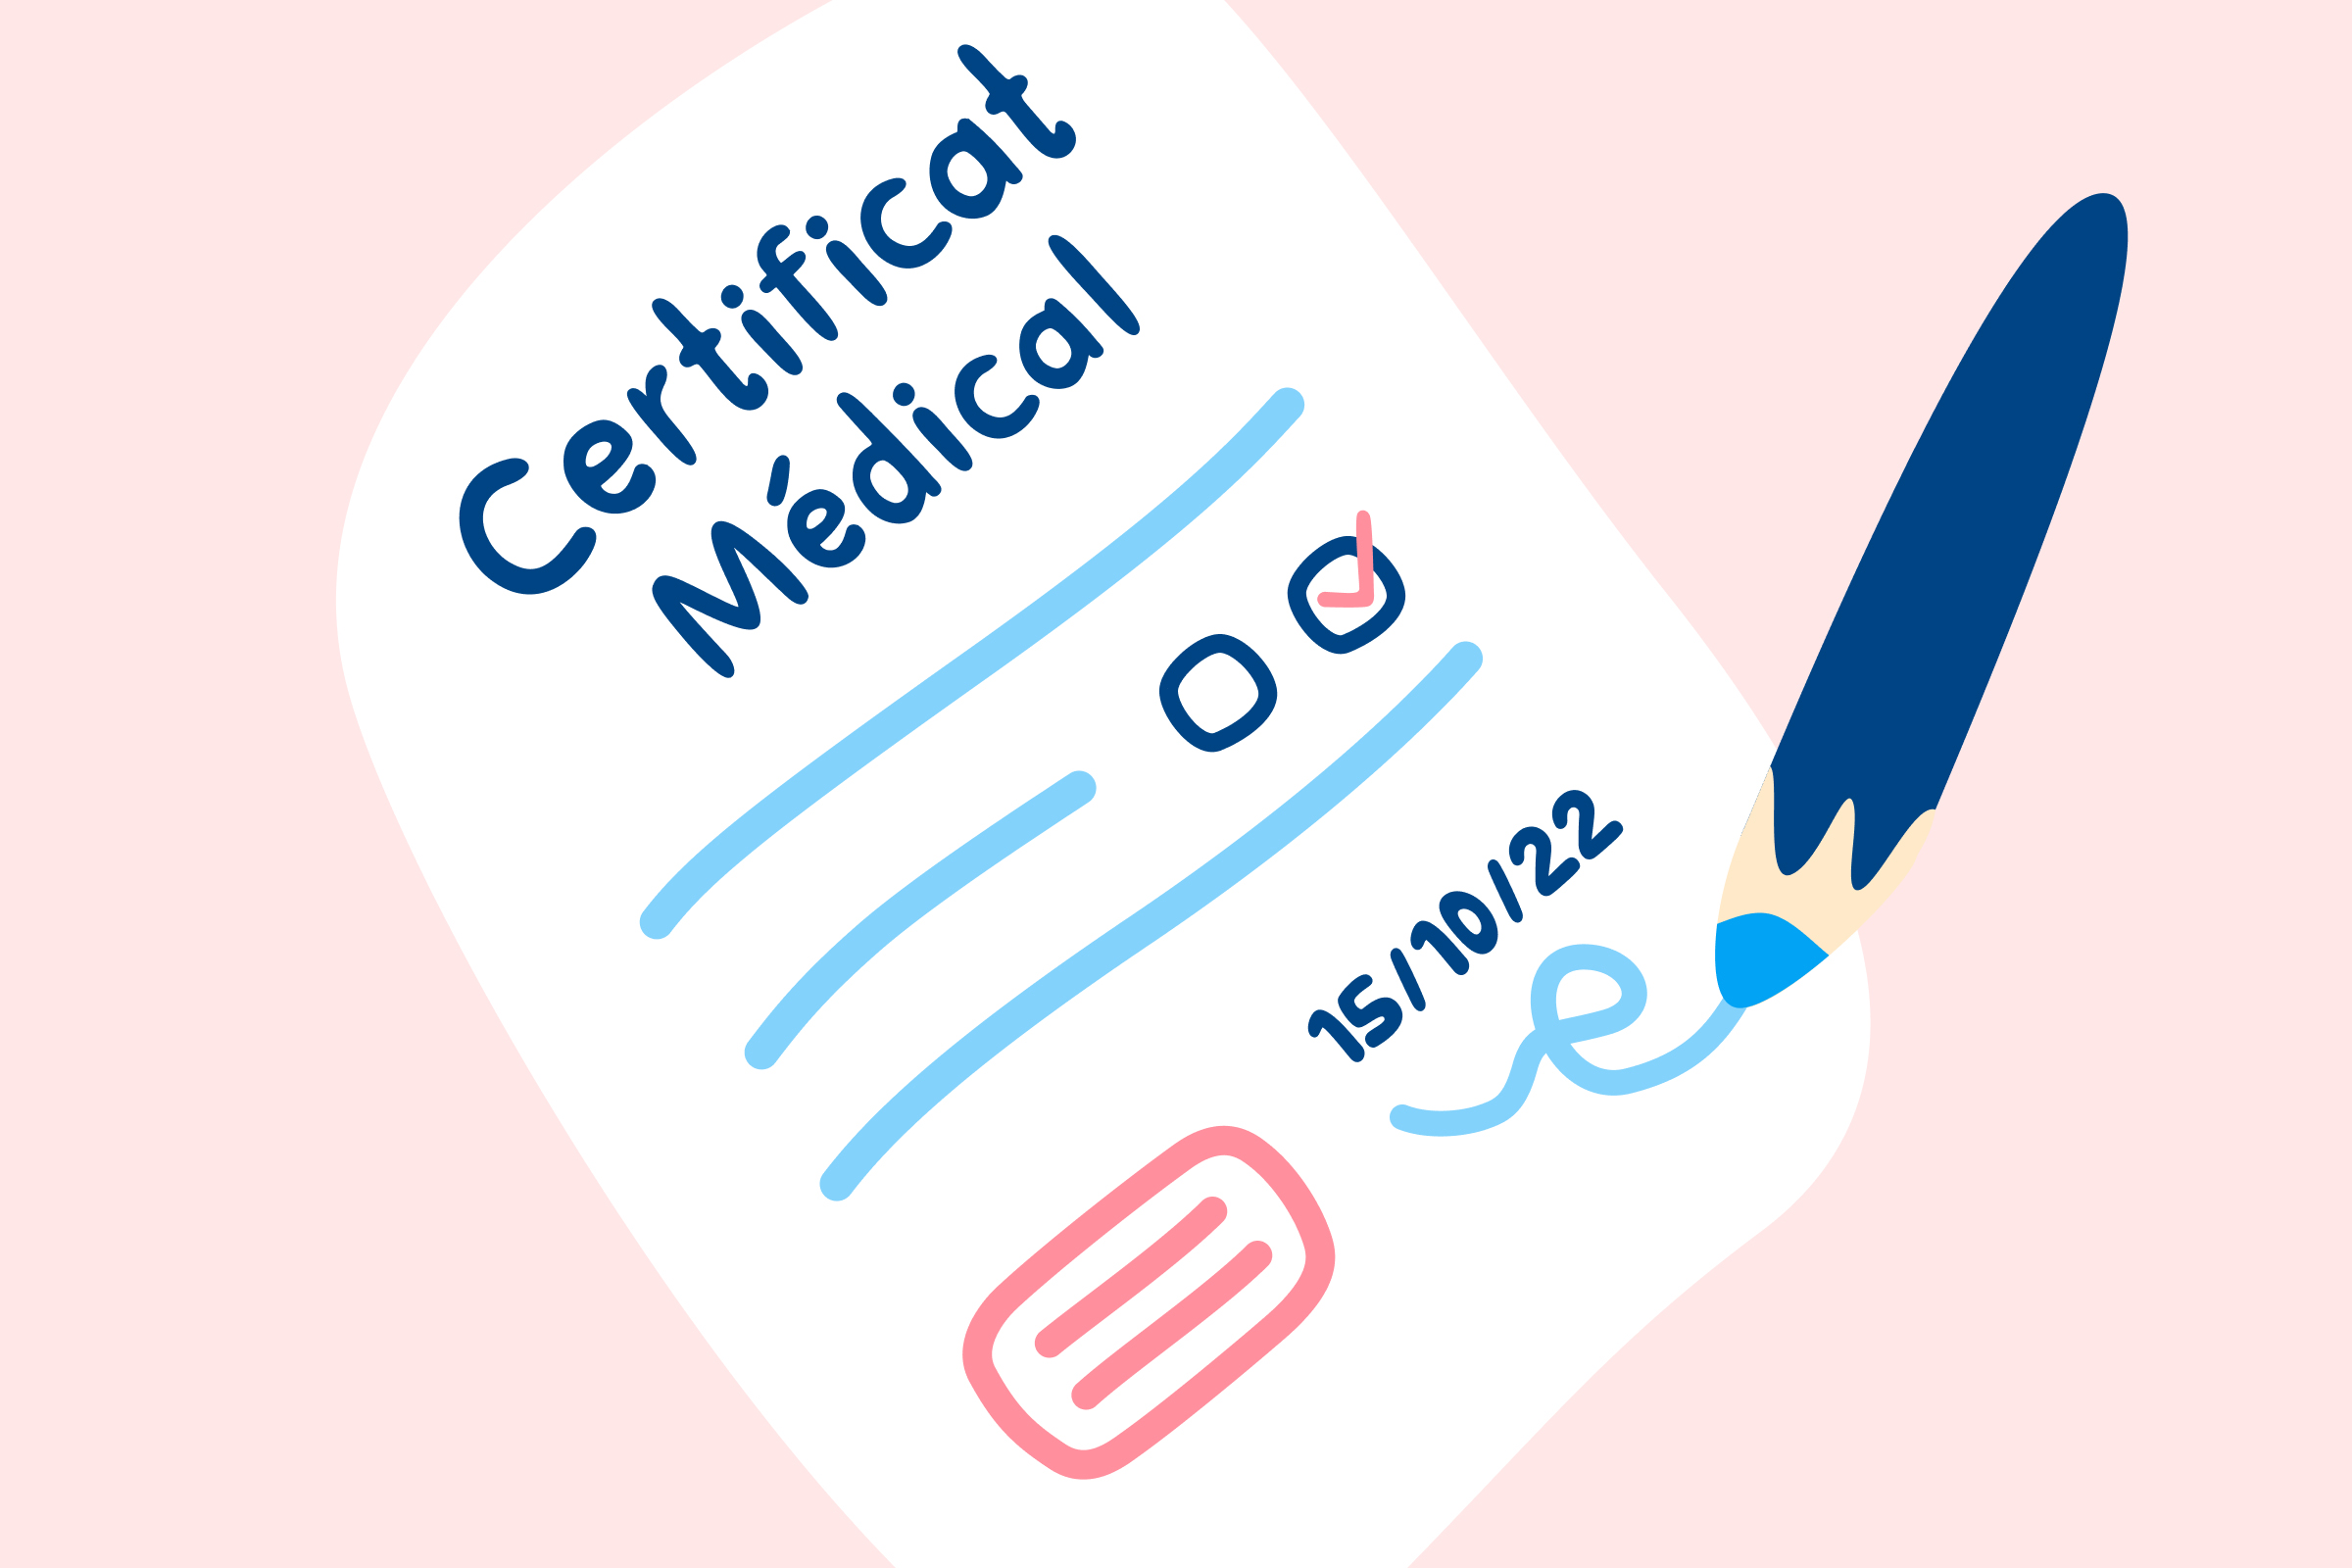 certificat medical